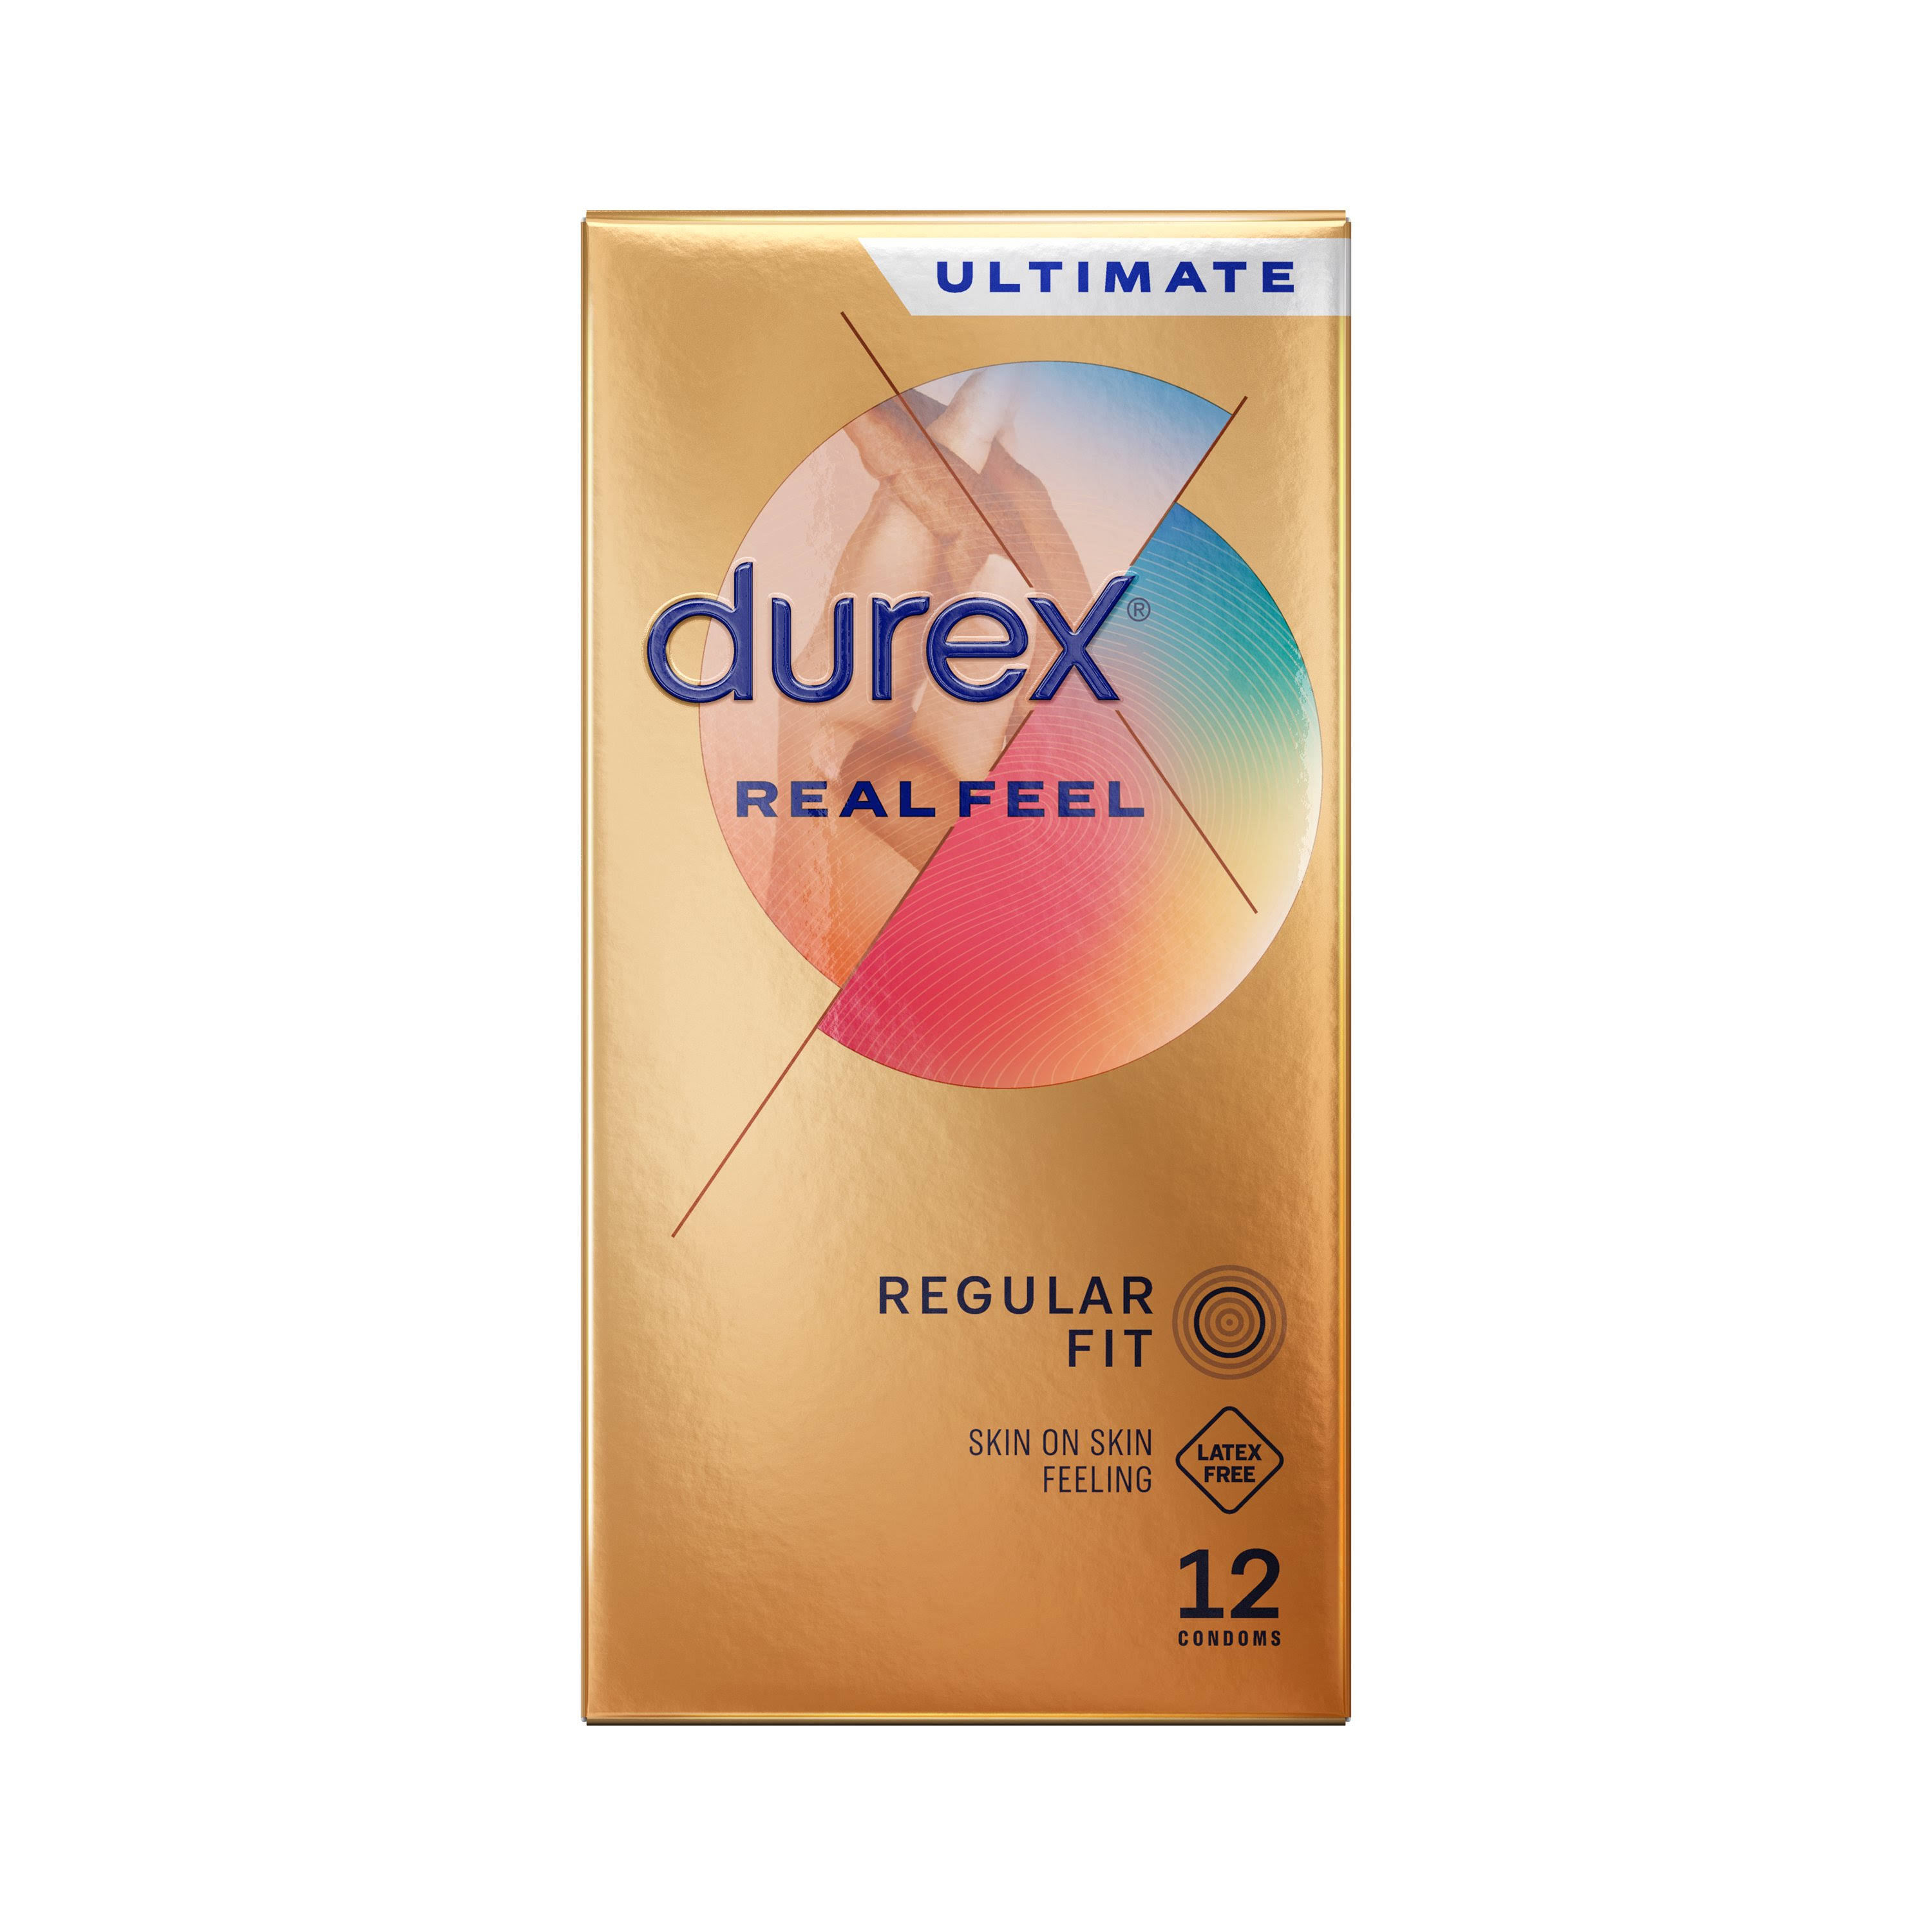 Durex Condoms Real Feel - 12 Pack